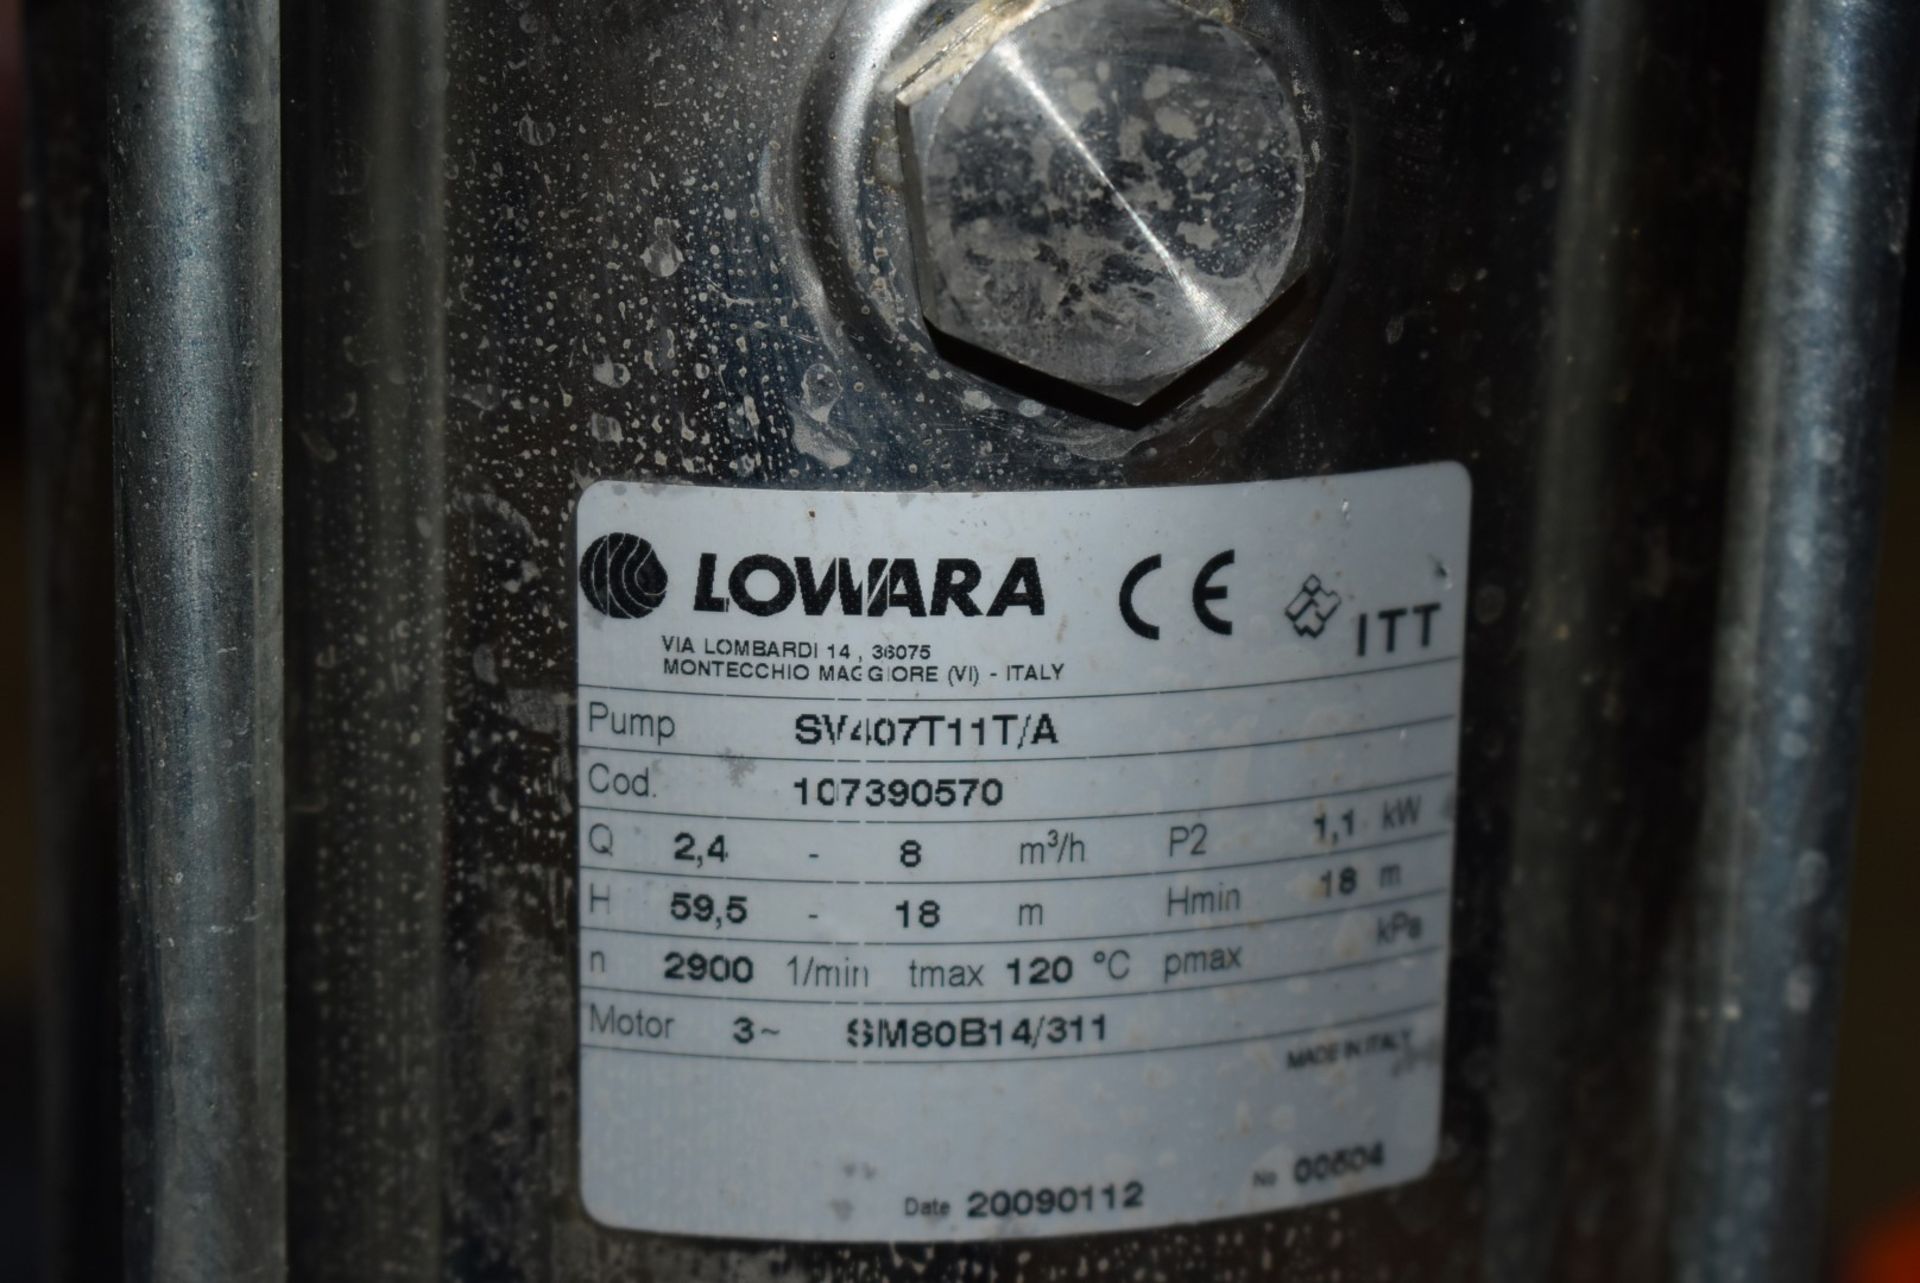 2 x Hydrovar HV2.015 Speed Water Pumps With Lowara SM80B14 Surface Motors, Aquapresso 35L 10 Bar - Image 11 of 28